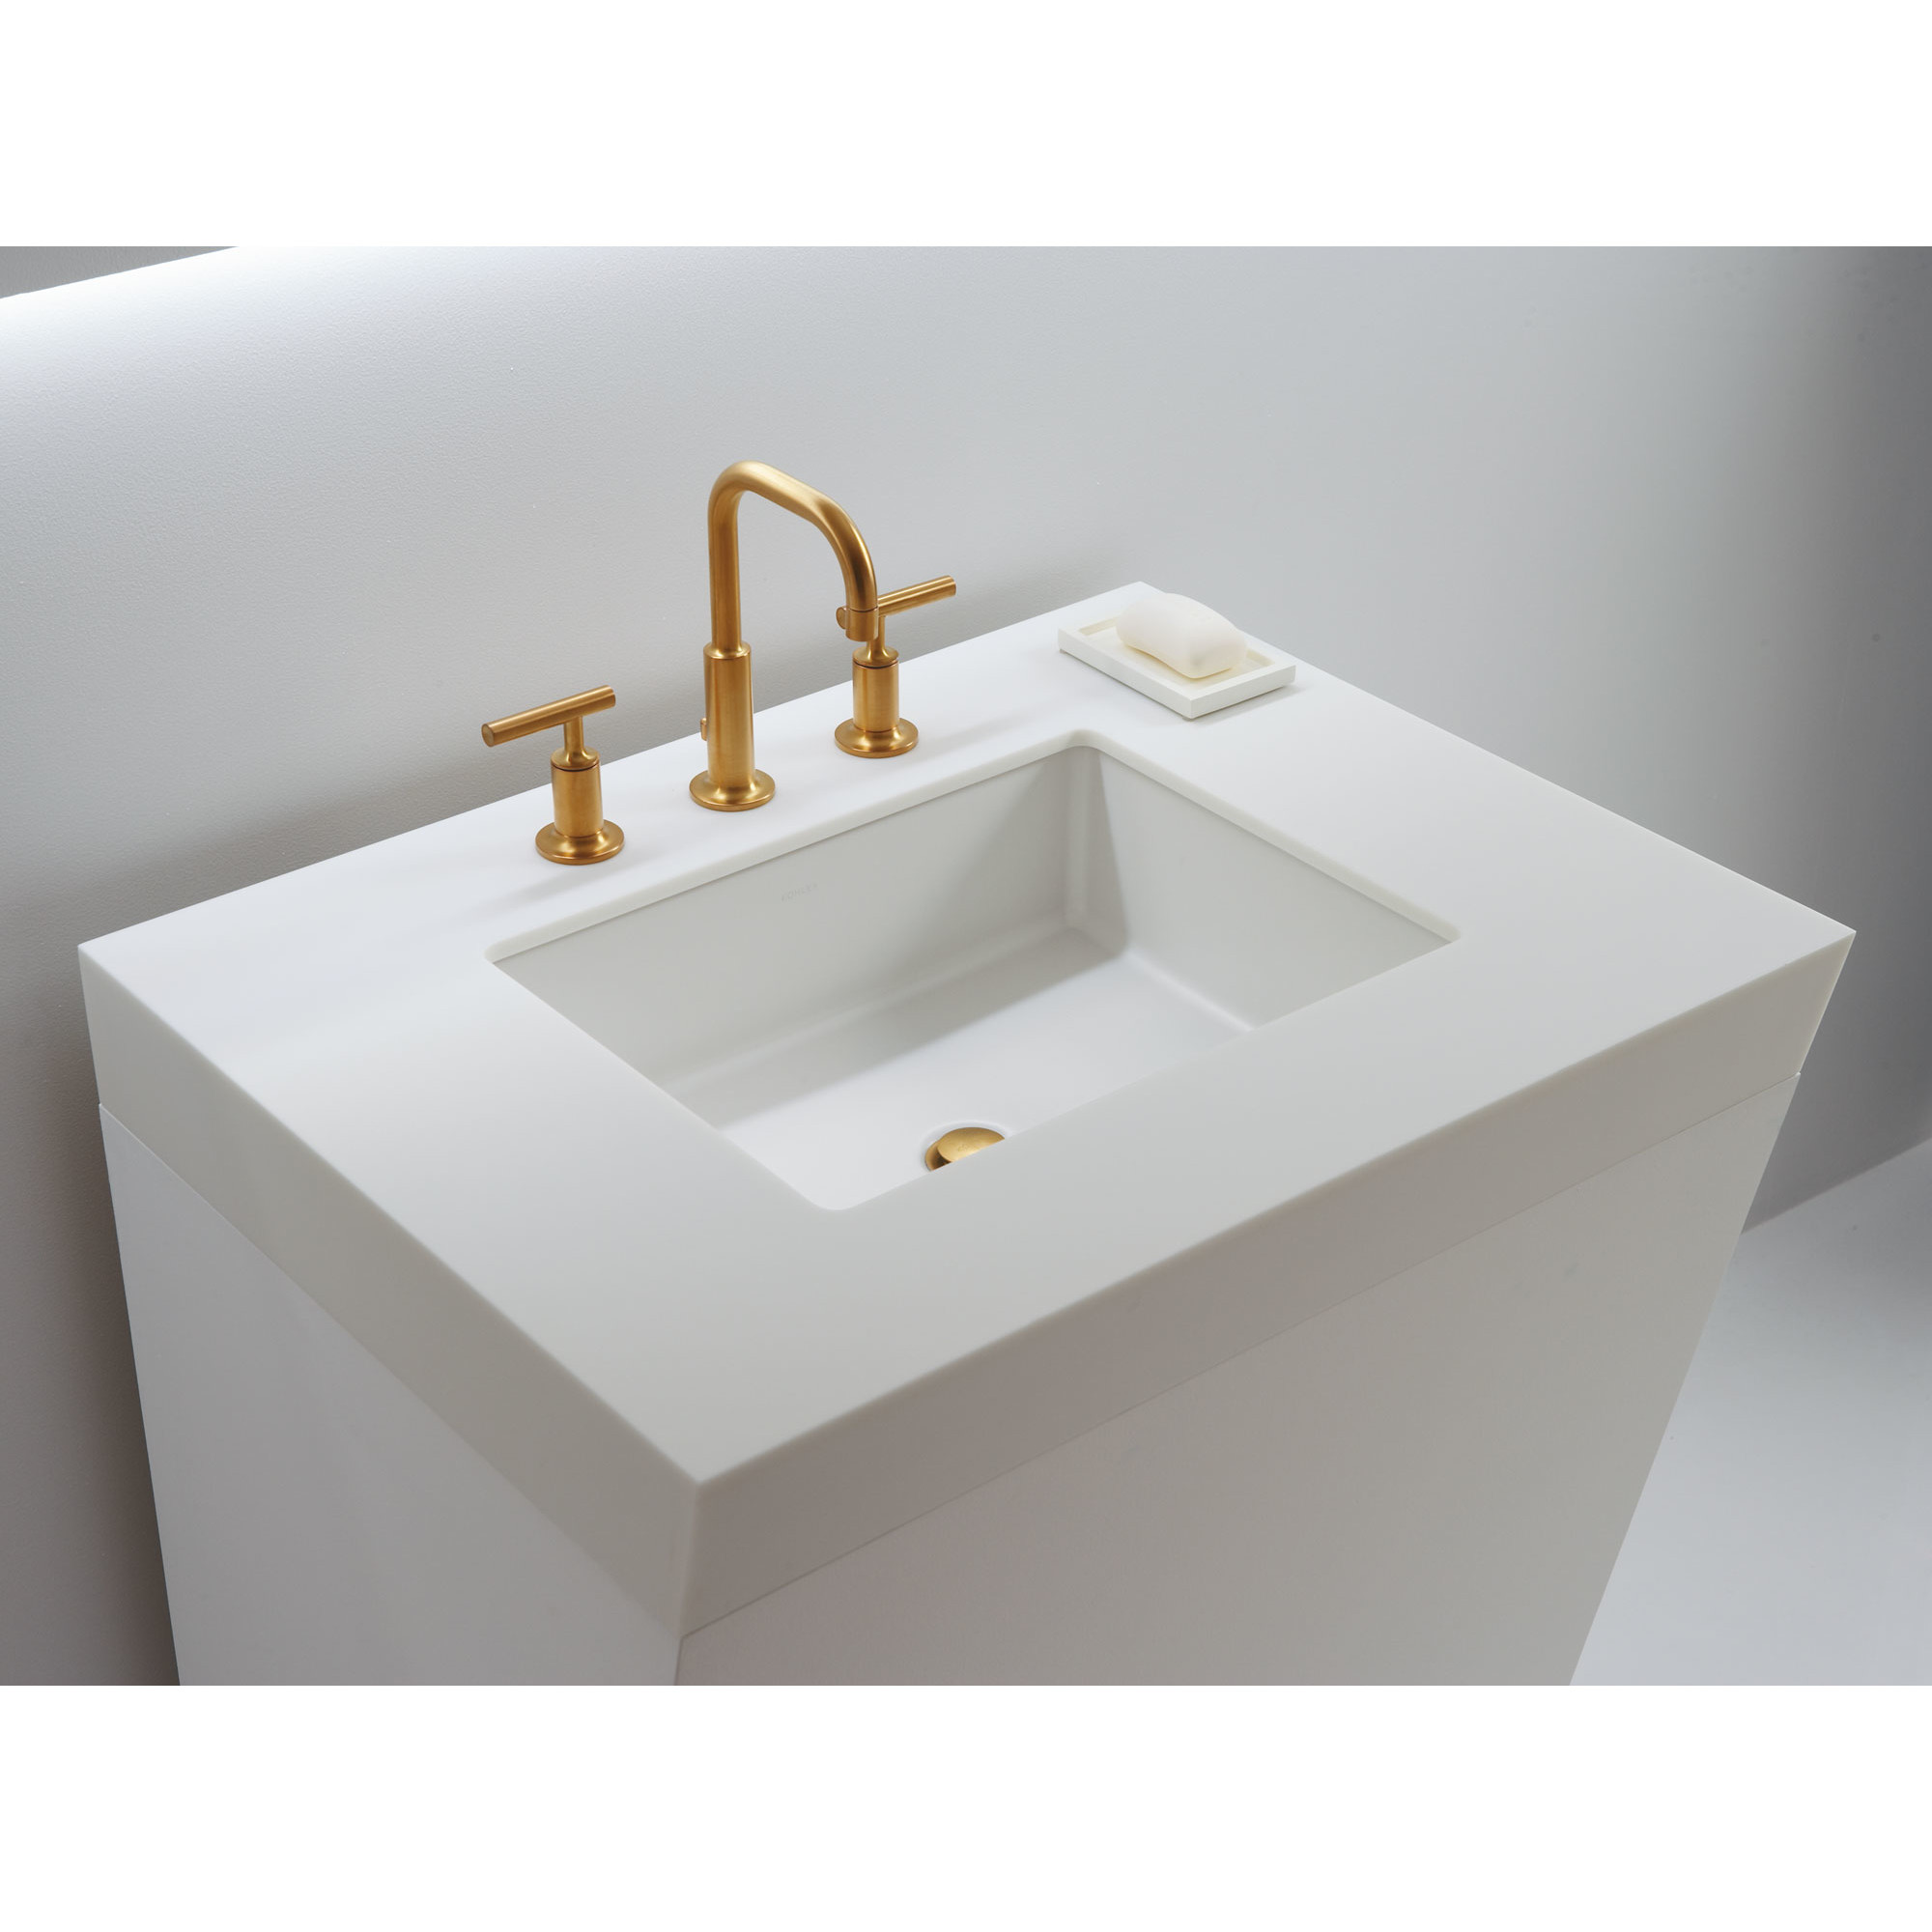 Best ideas about Undermount Bathroom Sinks
. Save or Pin Kohler Verticyl Rectangular Undermount Bathroom Sink with Now.